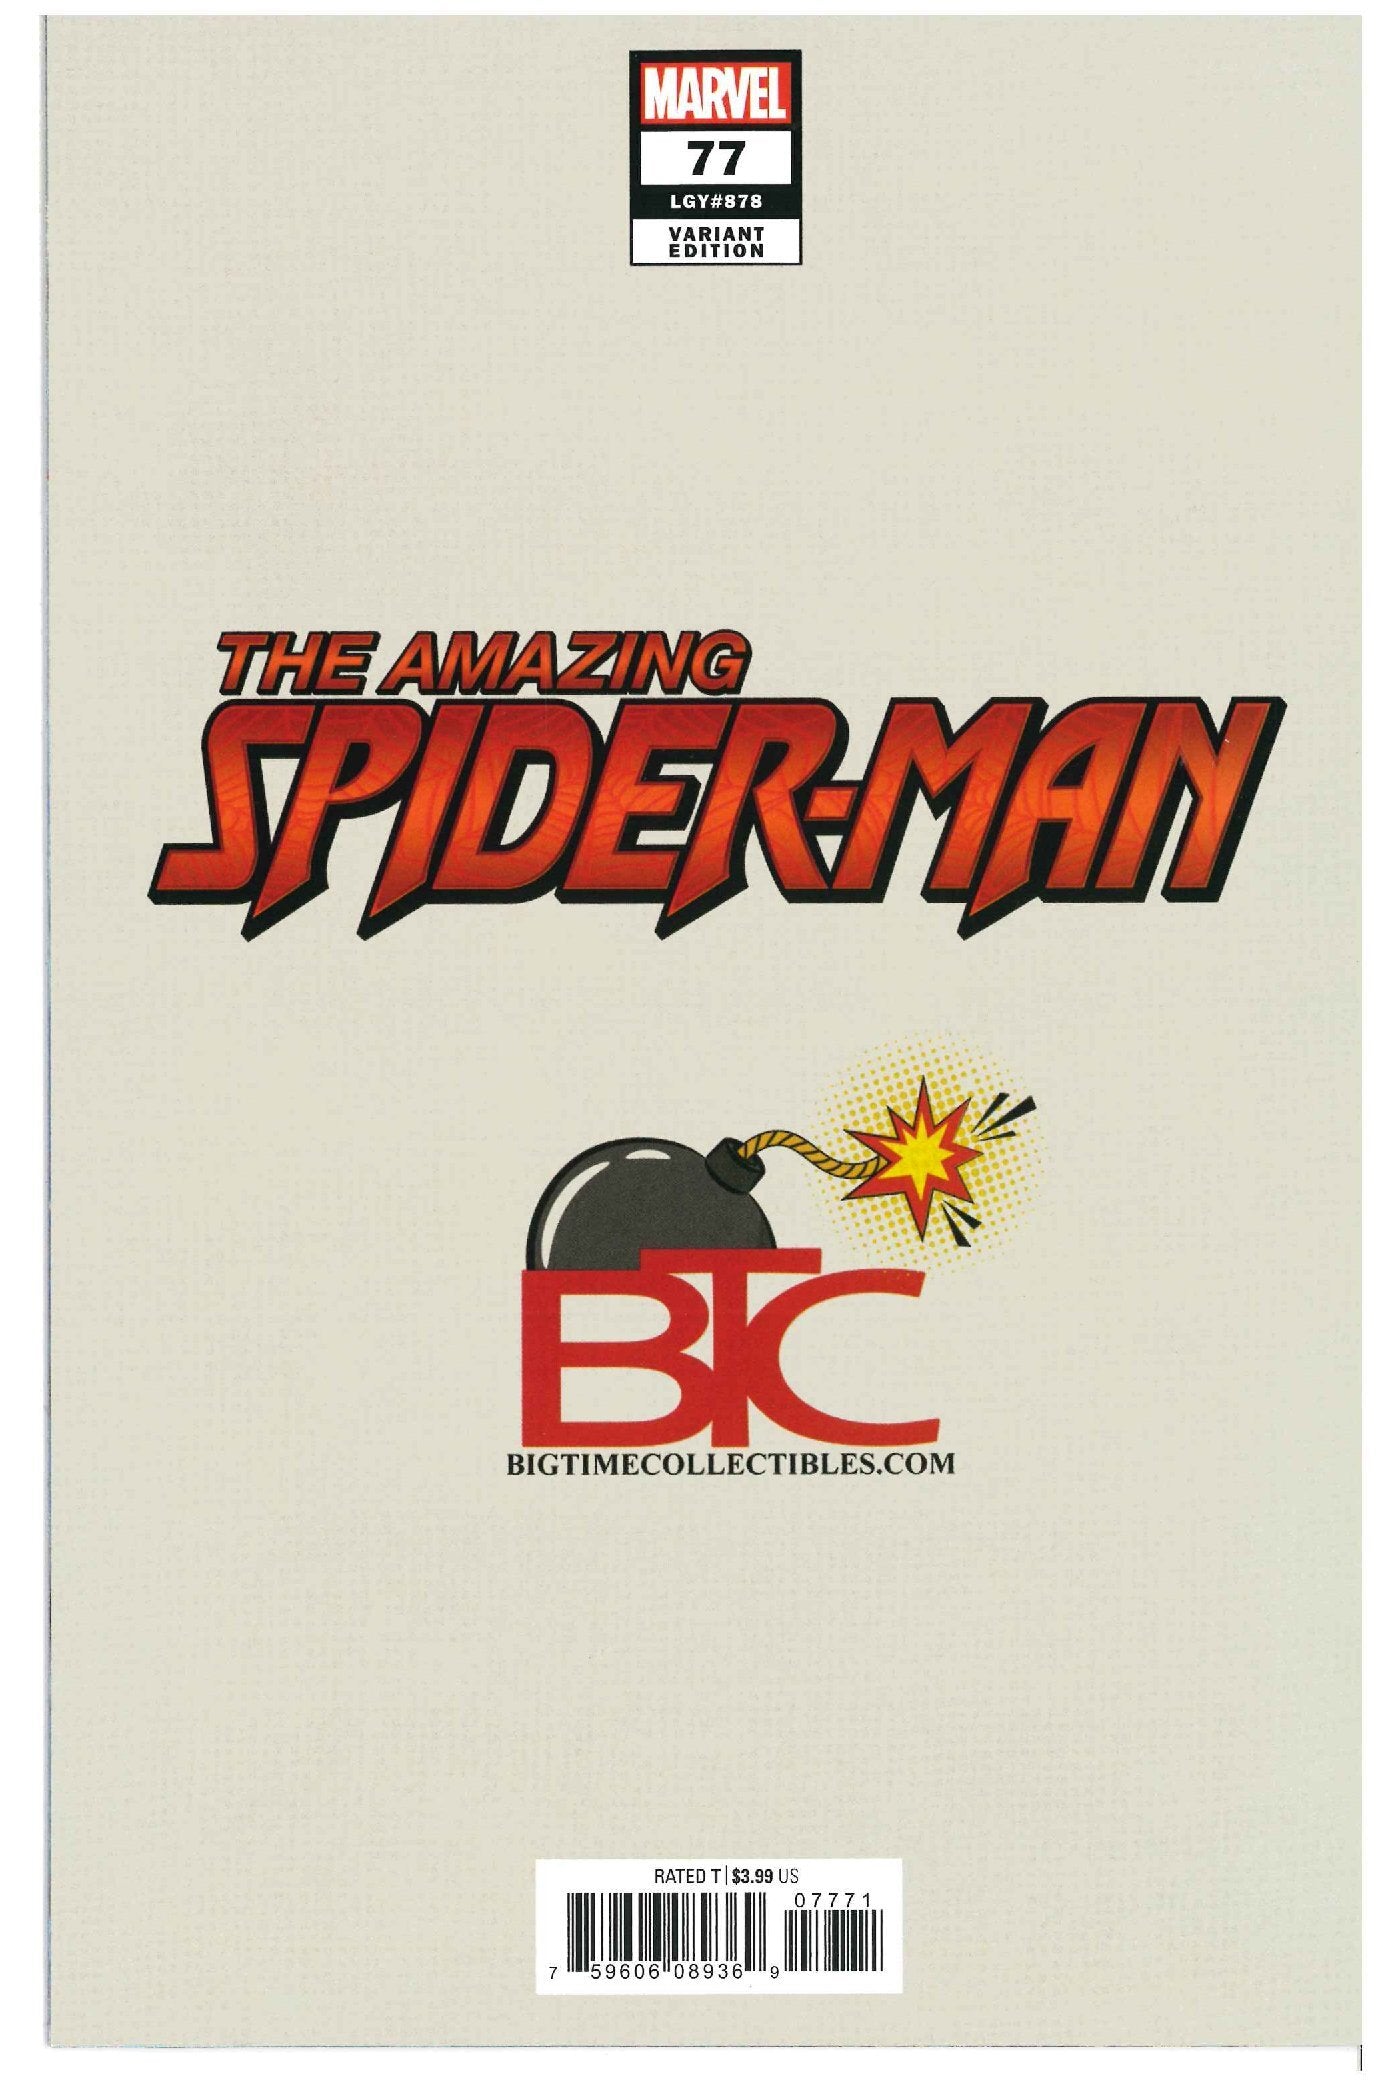 The Amazing Spider-Man #77 backside